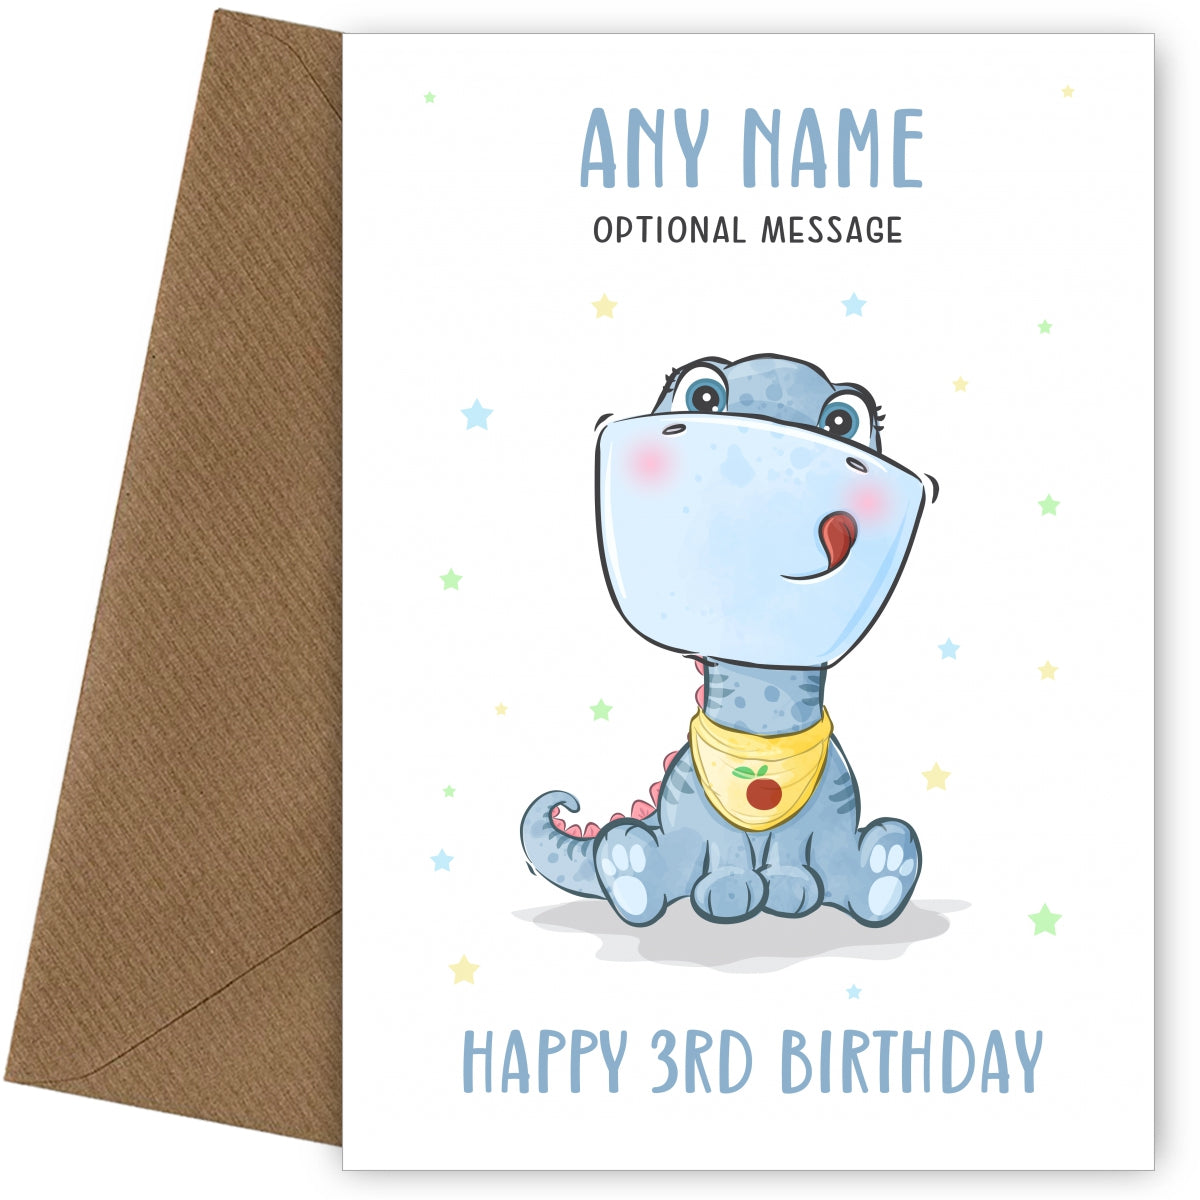 3rd Birthday Card for Any Name - Baby Dinosaur